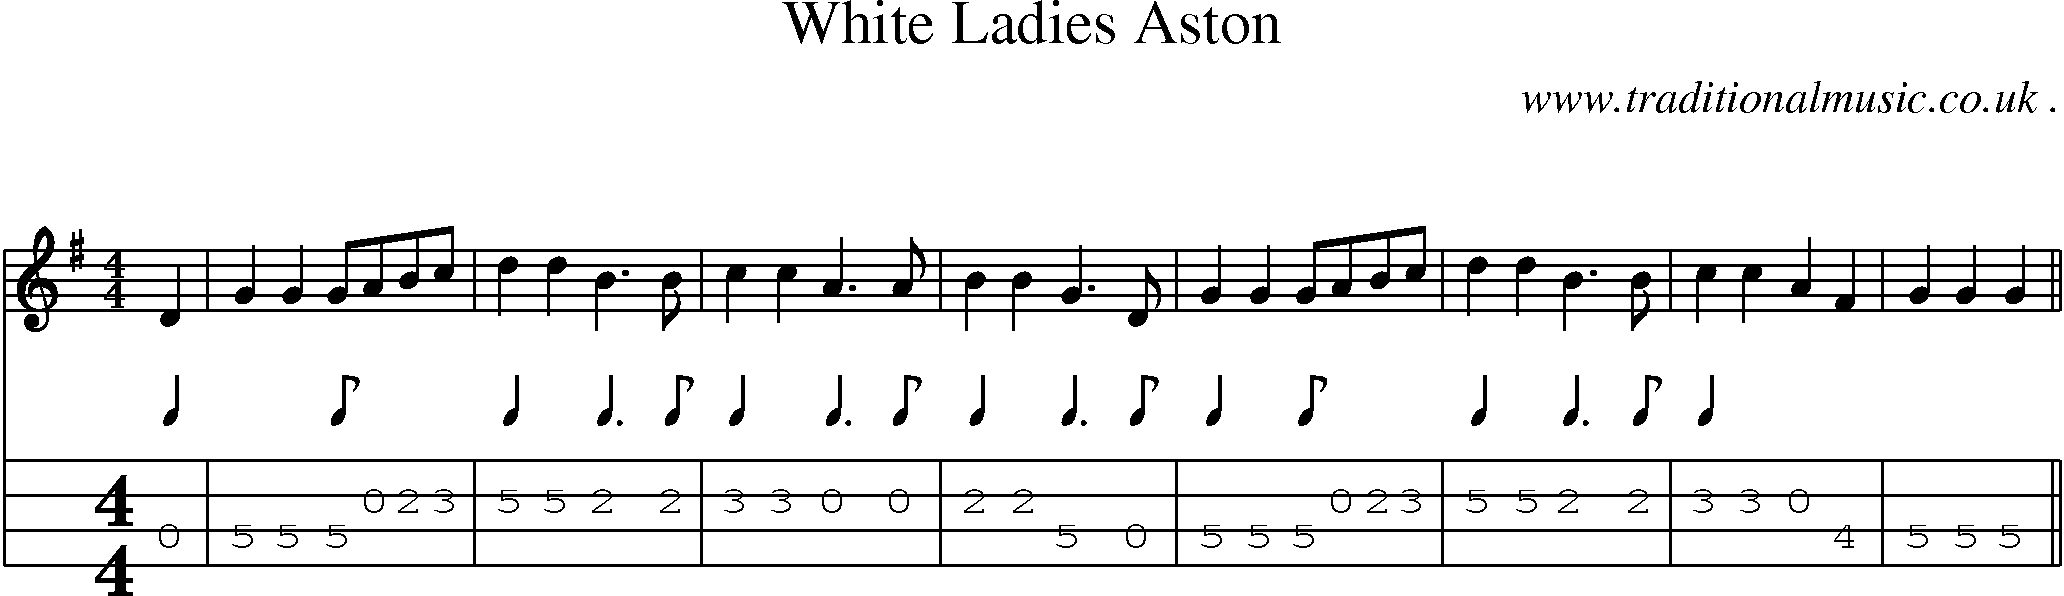 Sheet-Music and Mandolin Tabs for White Ladies Aston